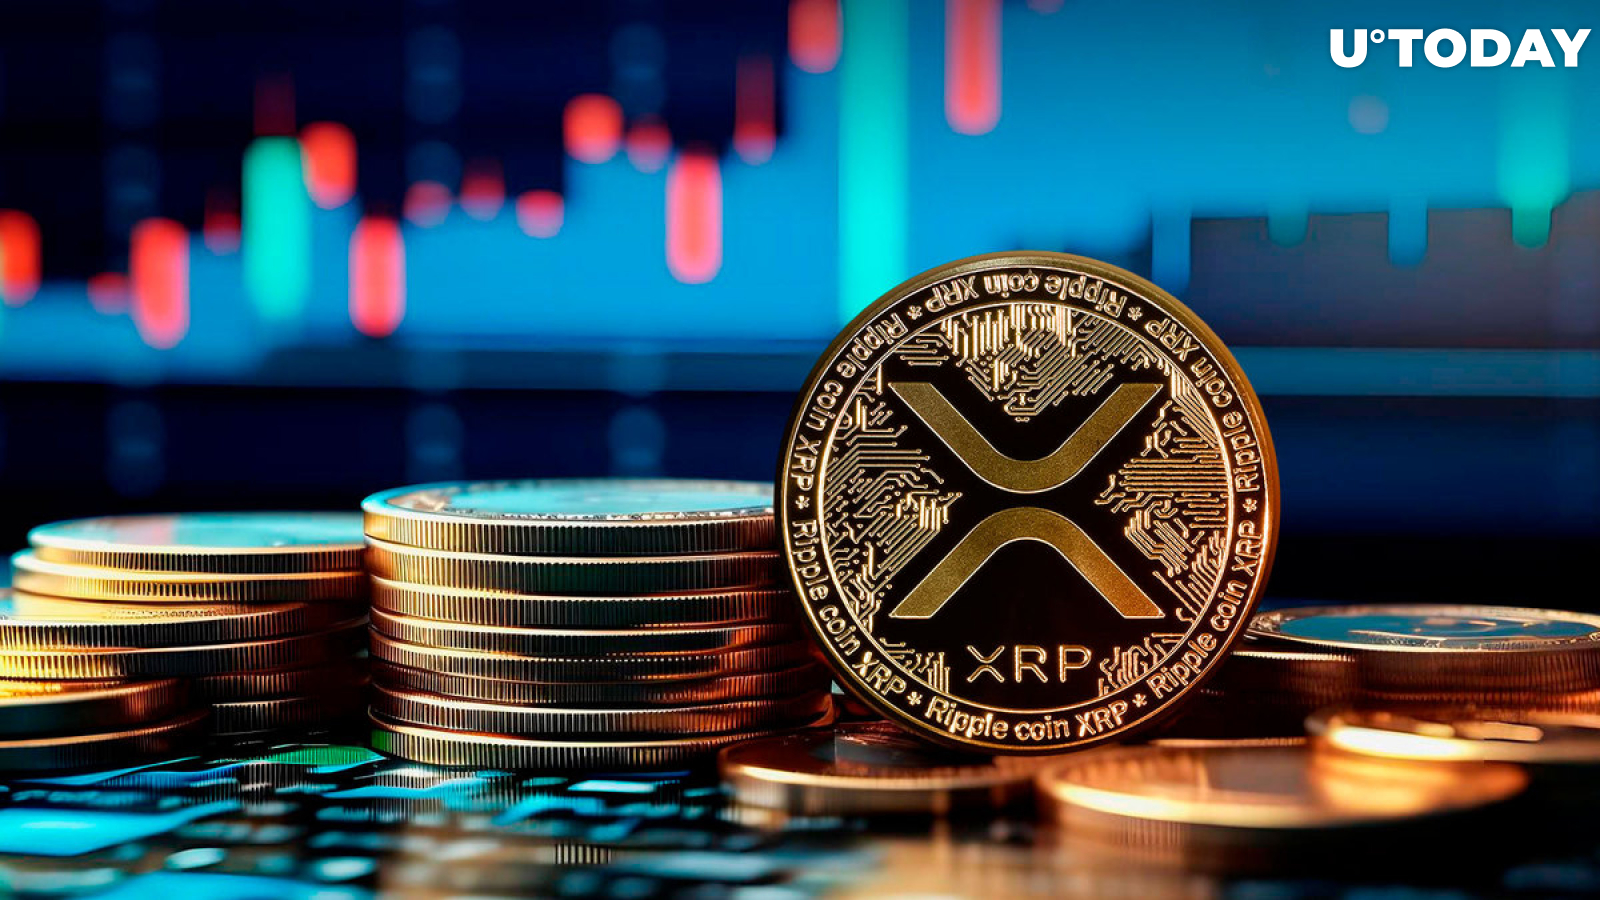 XRP Soars With $540 Million Market Cap Boost: Details